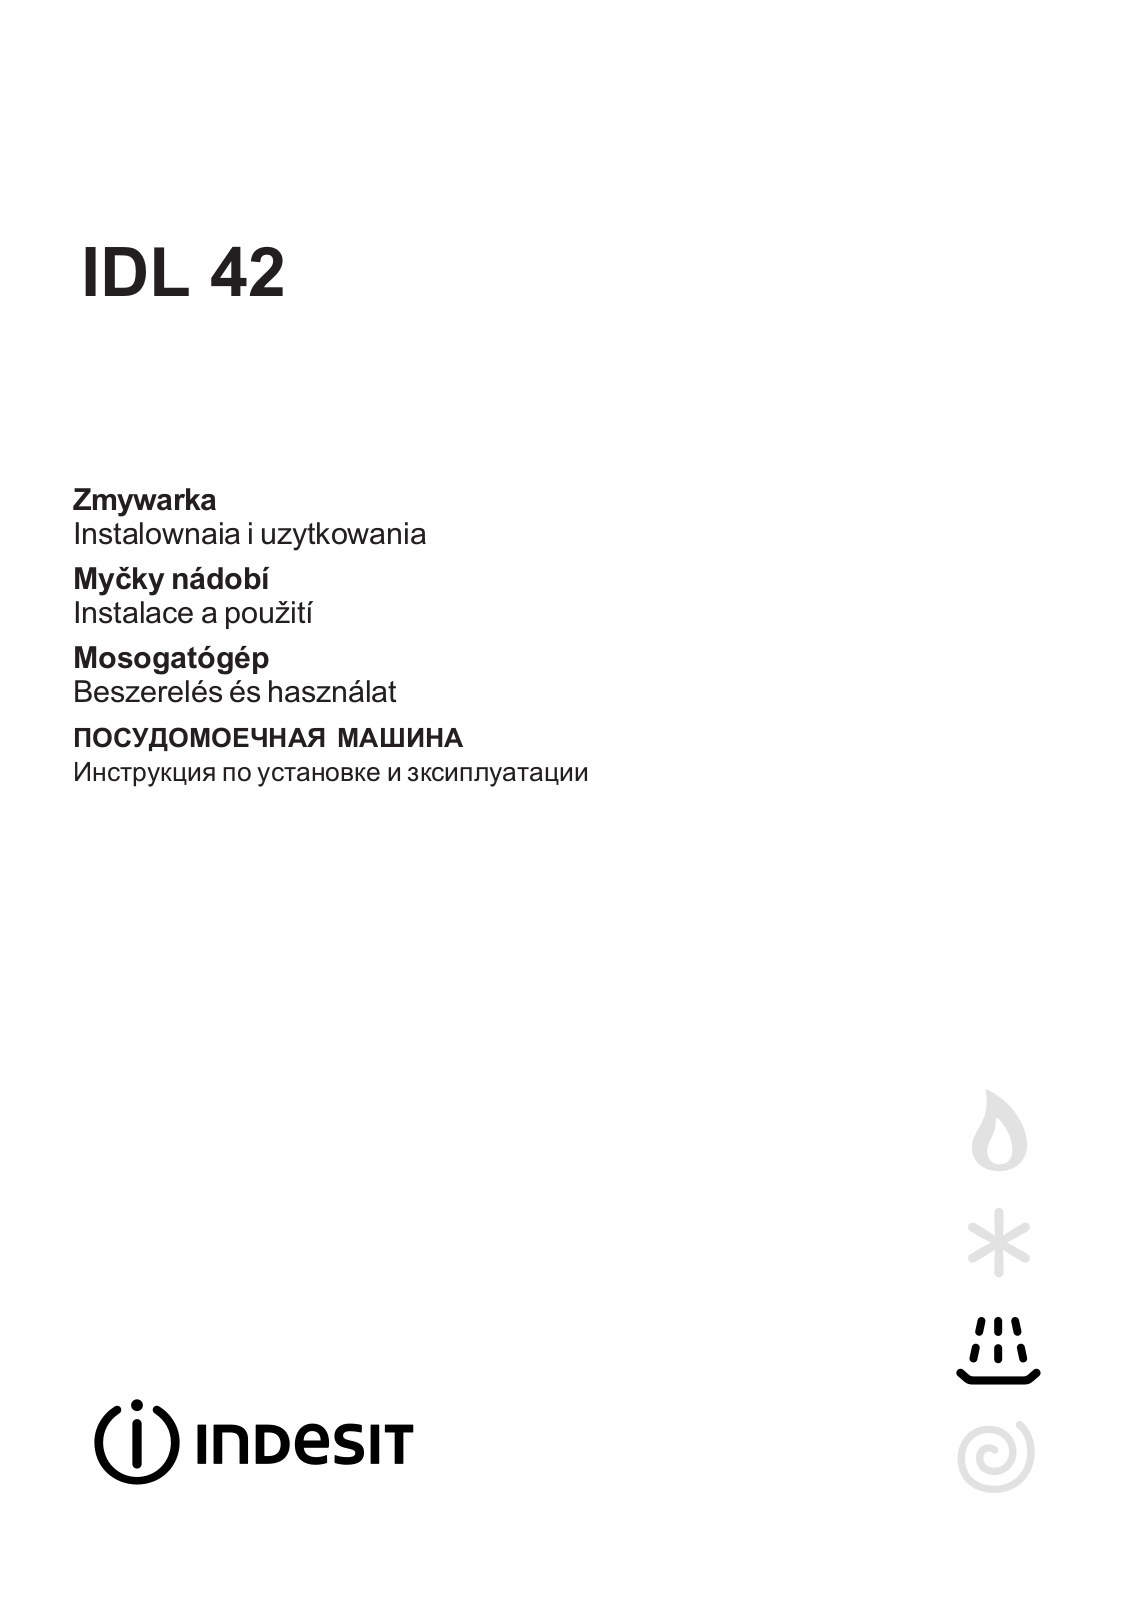 Indesit IDL 42 User Manual